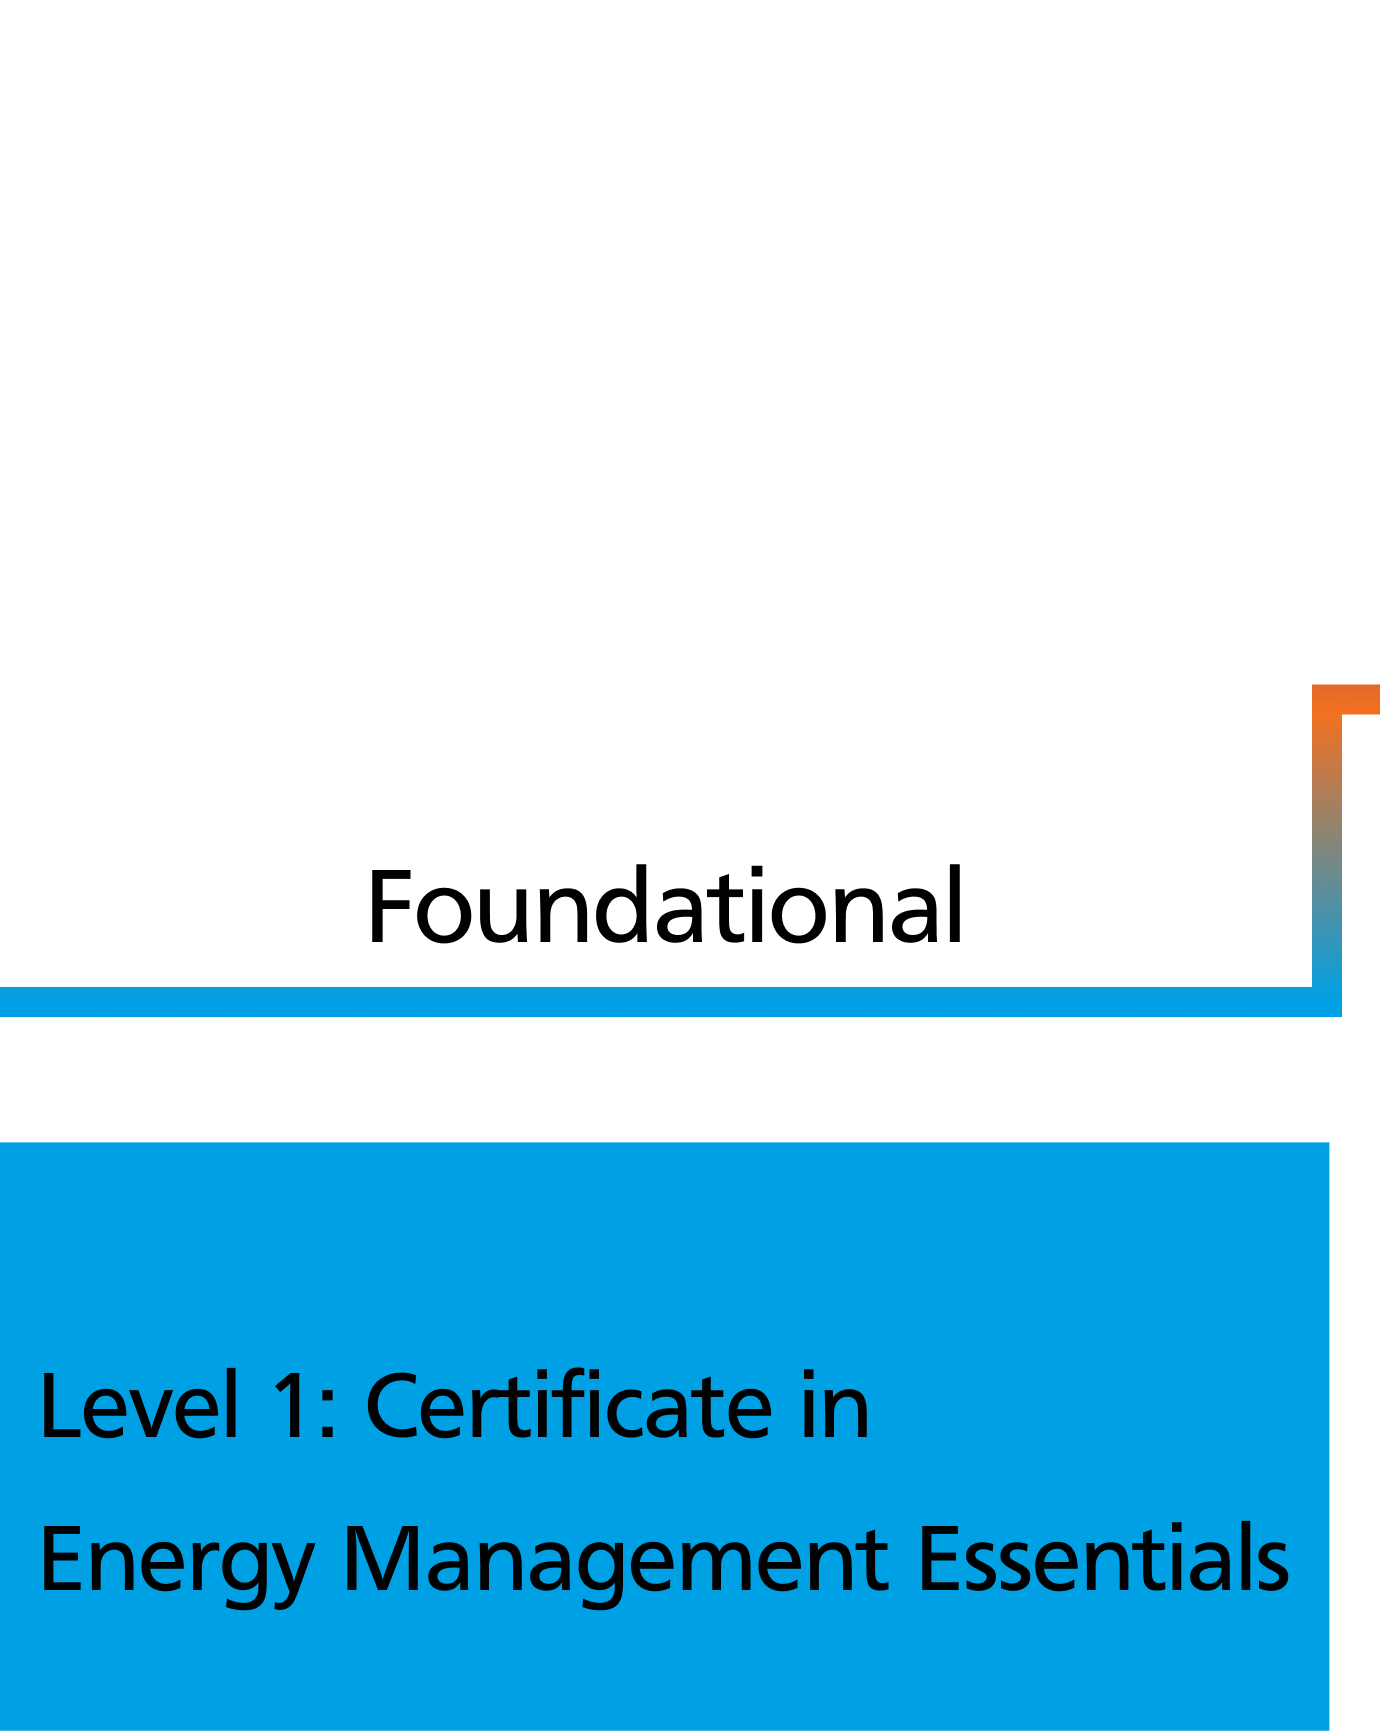 Level 1: Certificate in Energy Management Essentials